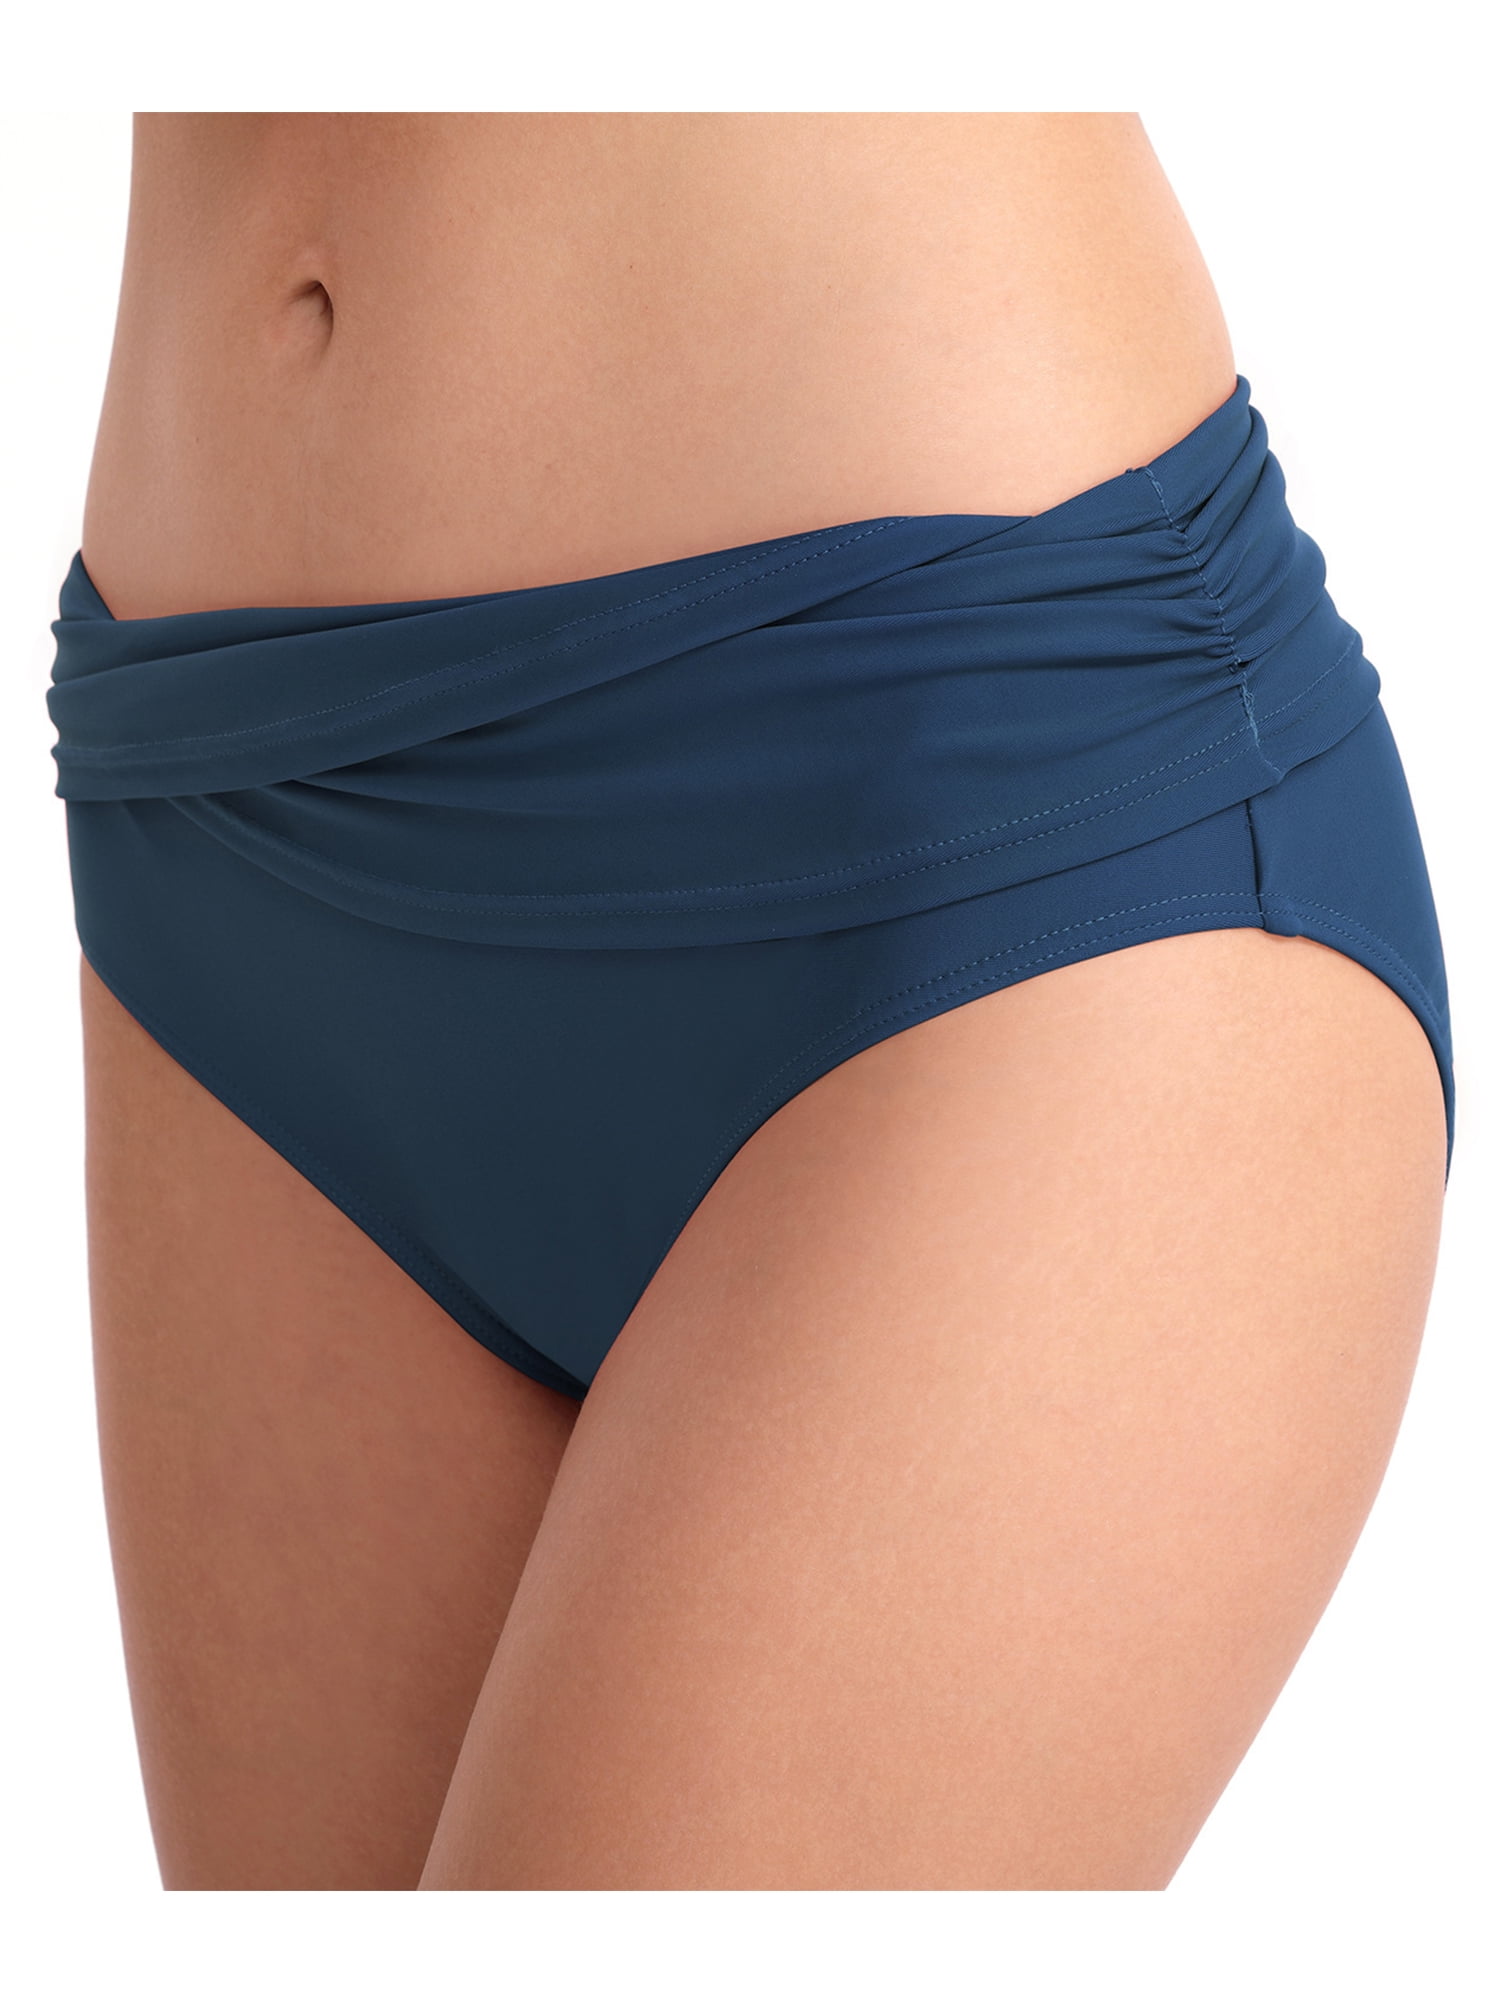 Womens High Waisted Bikini Tankini Bottoms Tummy Control Swim Briefs Bathing Swimming Shorts Pants